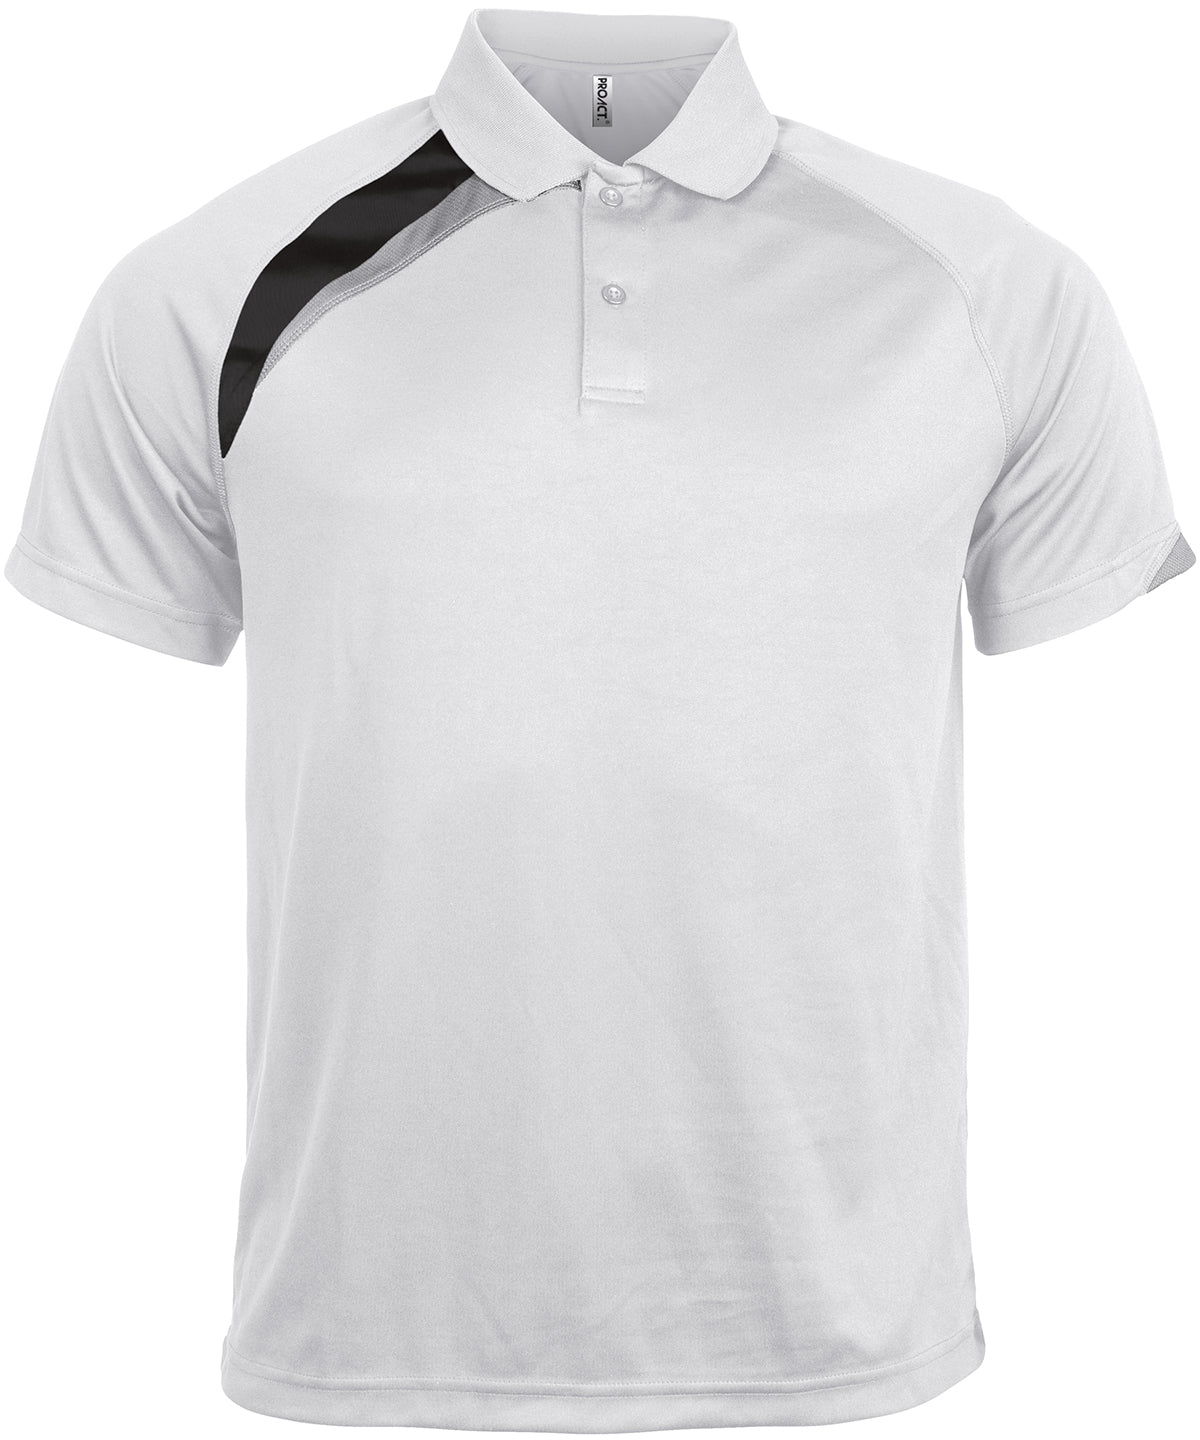 Personalised Polo Shirts - Black Kariban Proact Adults' short-sleeved sports polo shirt